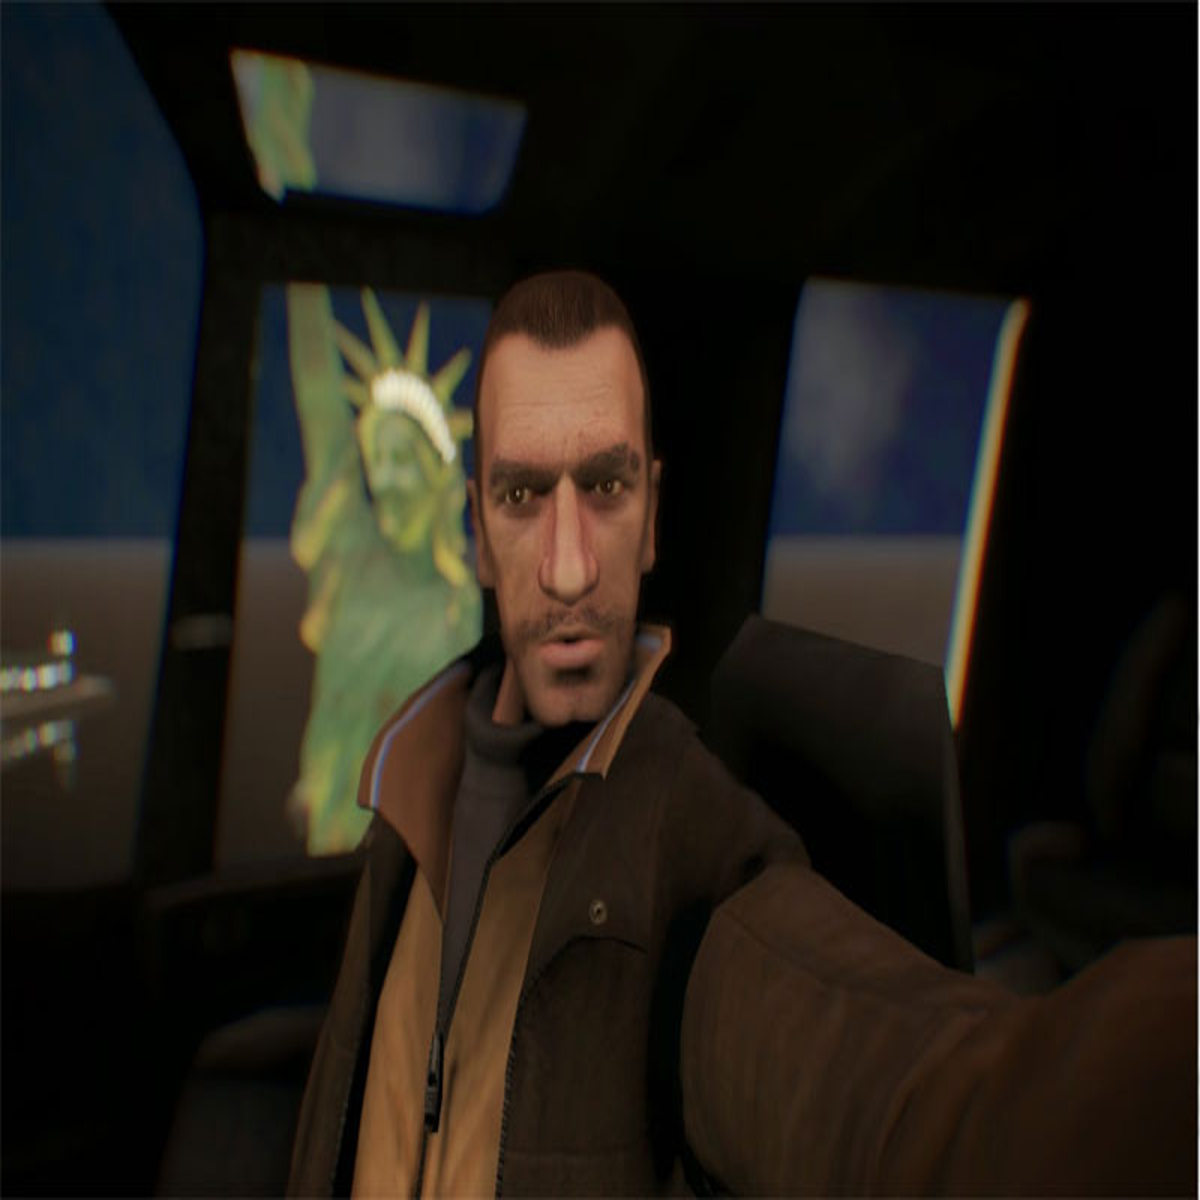 GTA 4 gets selfies via mod